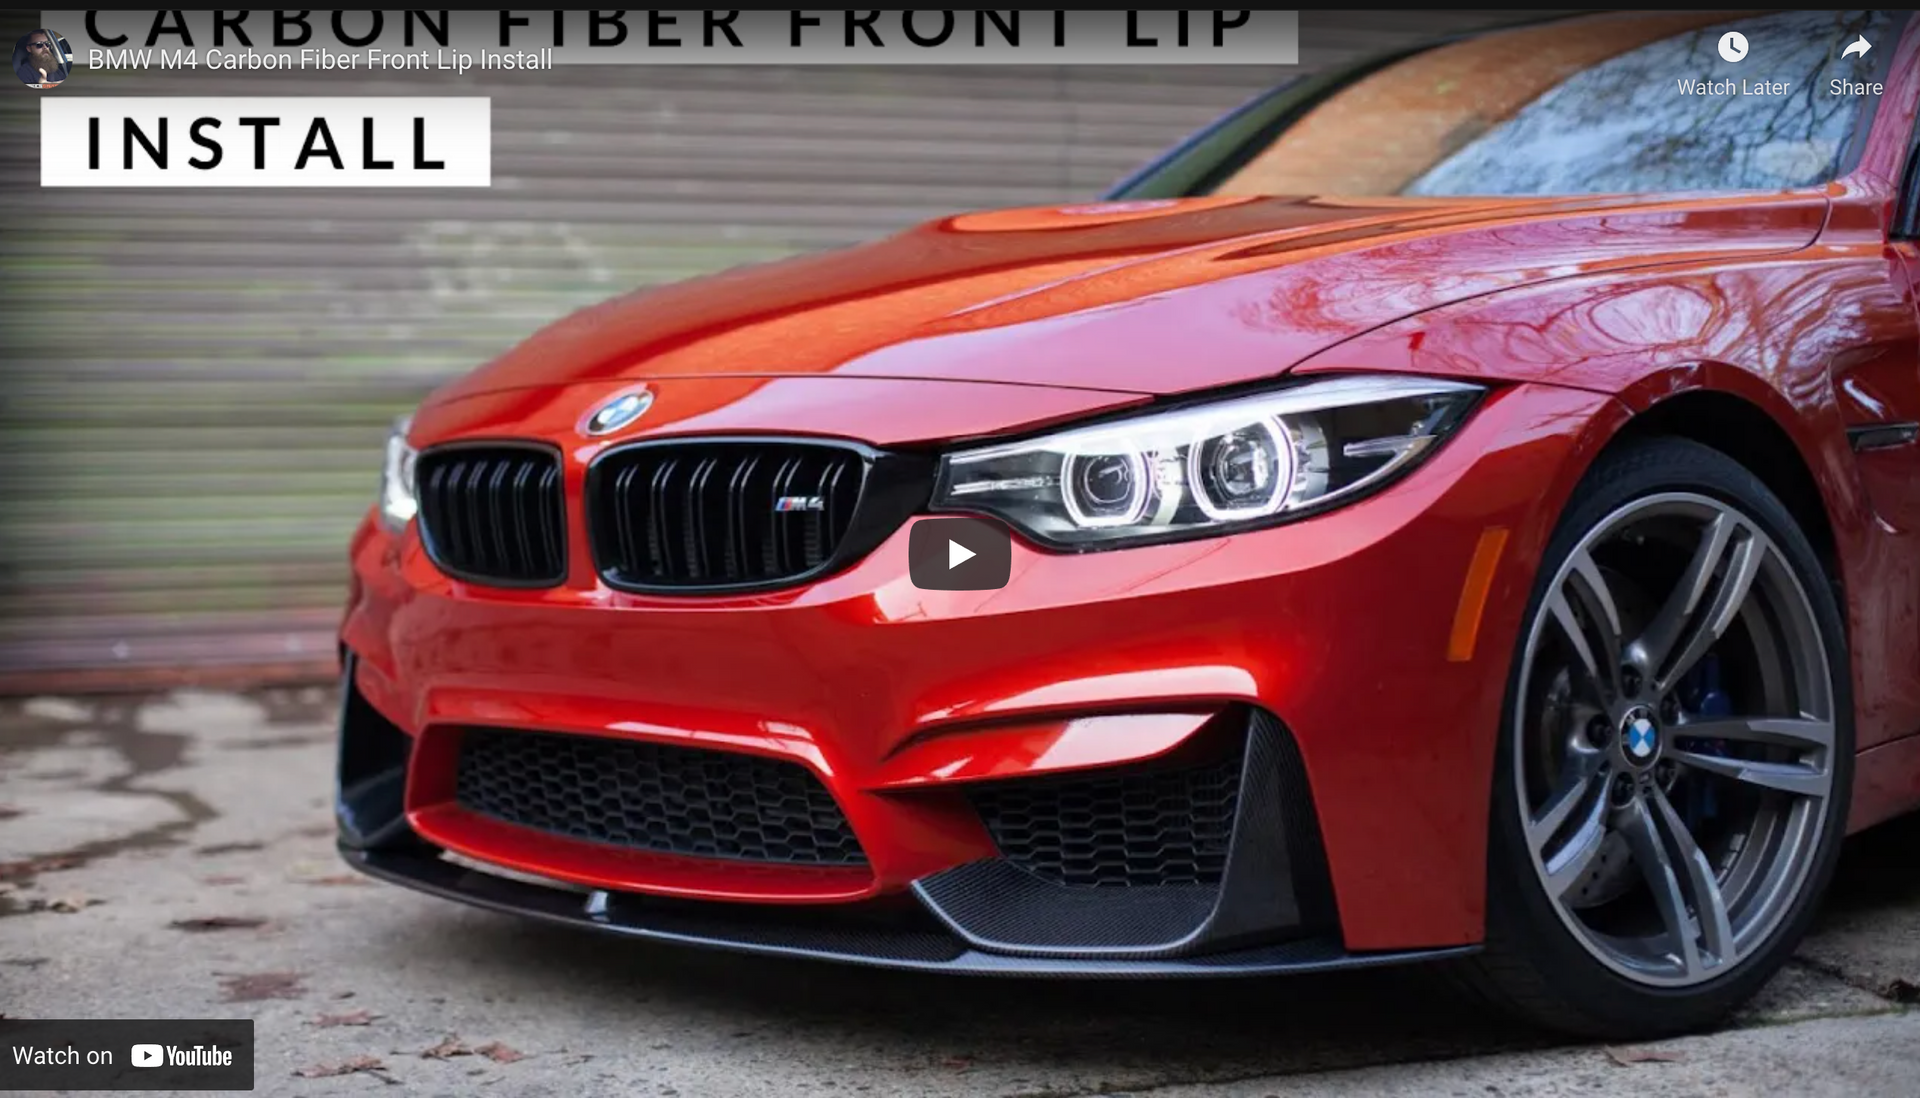 Load video: BMW M4 CARBON FIBER FRONT LIP INSTALL